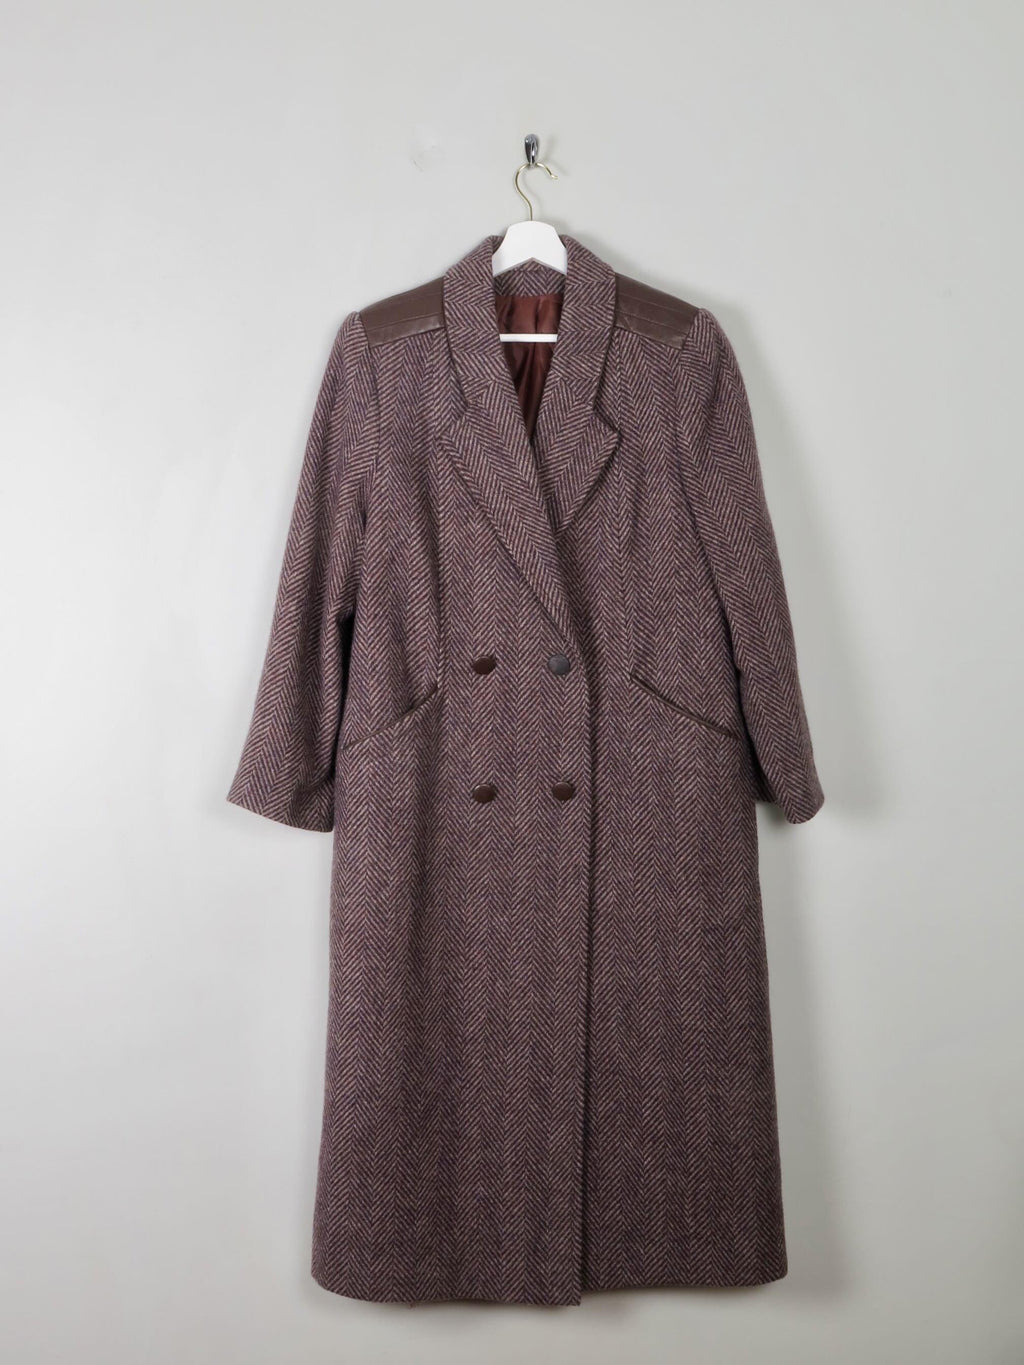 Women's Vintage Brown Tweed Coat M - The Harlequin